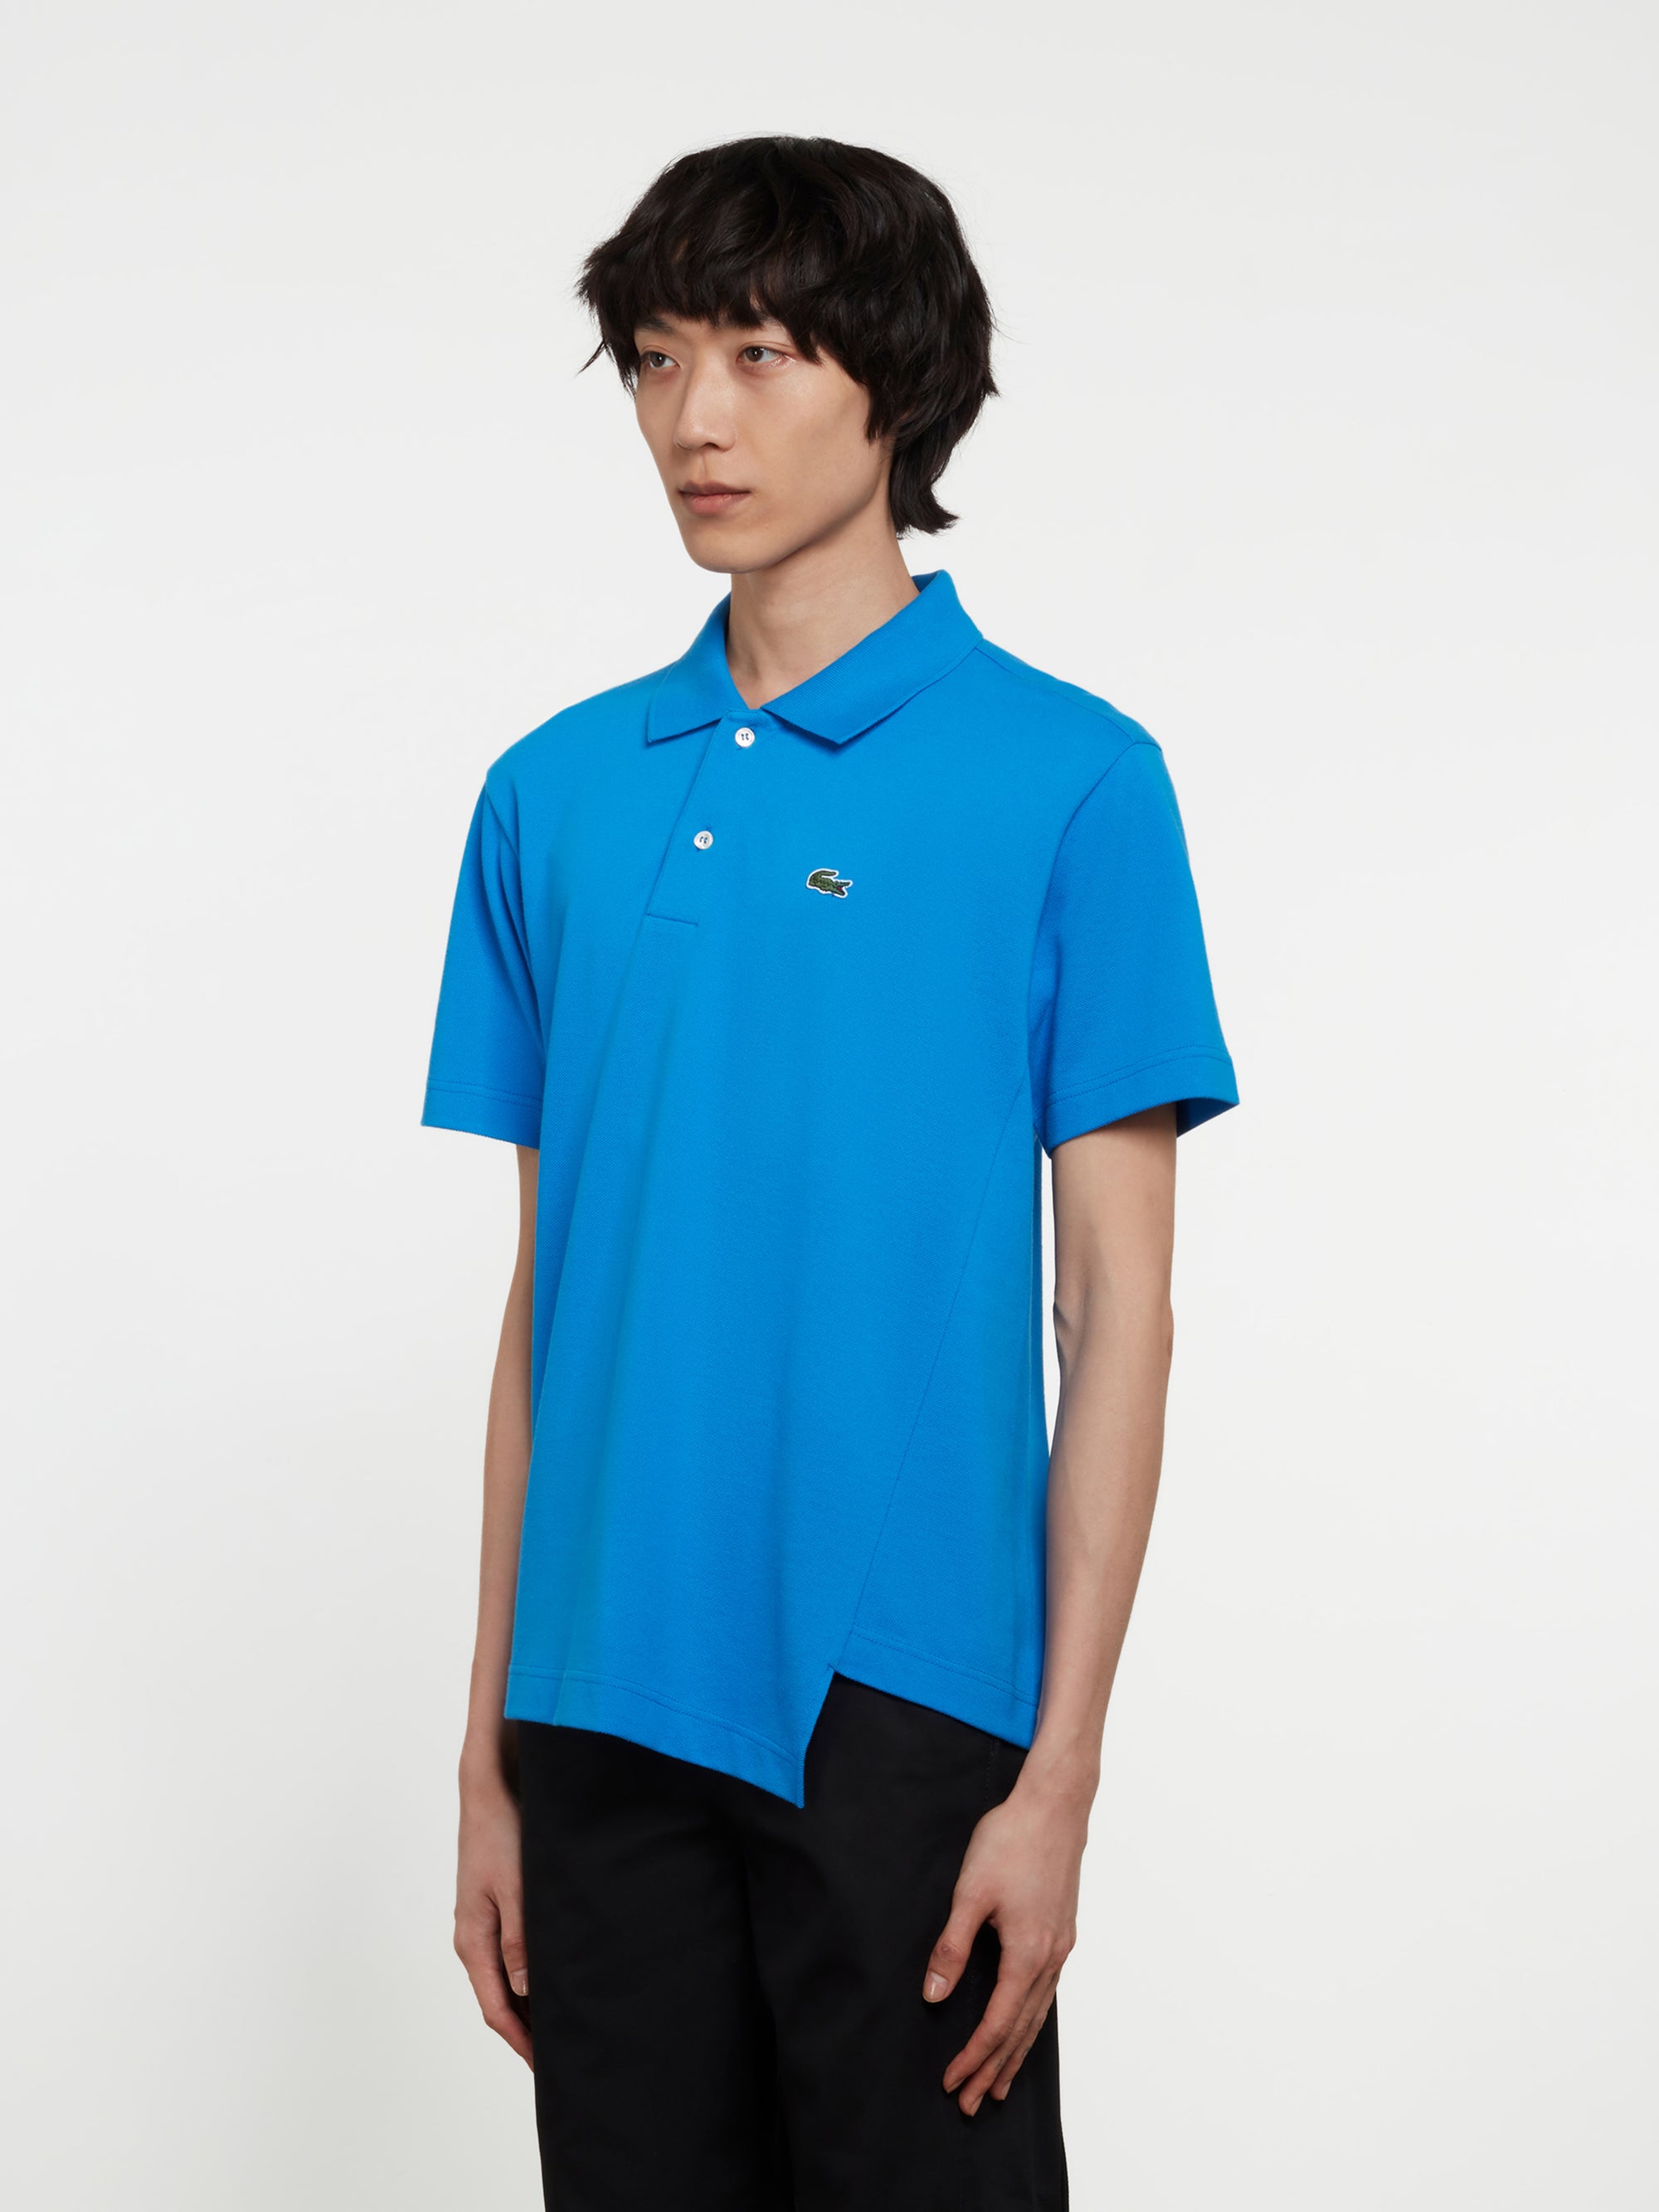 CDG Shirt - Lacoste Men’s Polo Shirt - (Blue) view 2